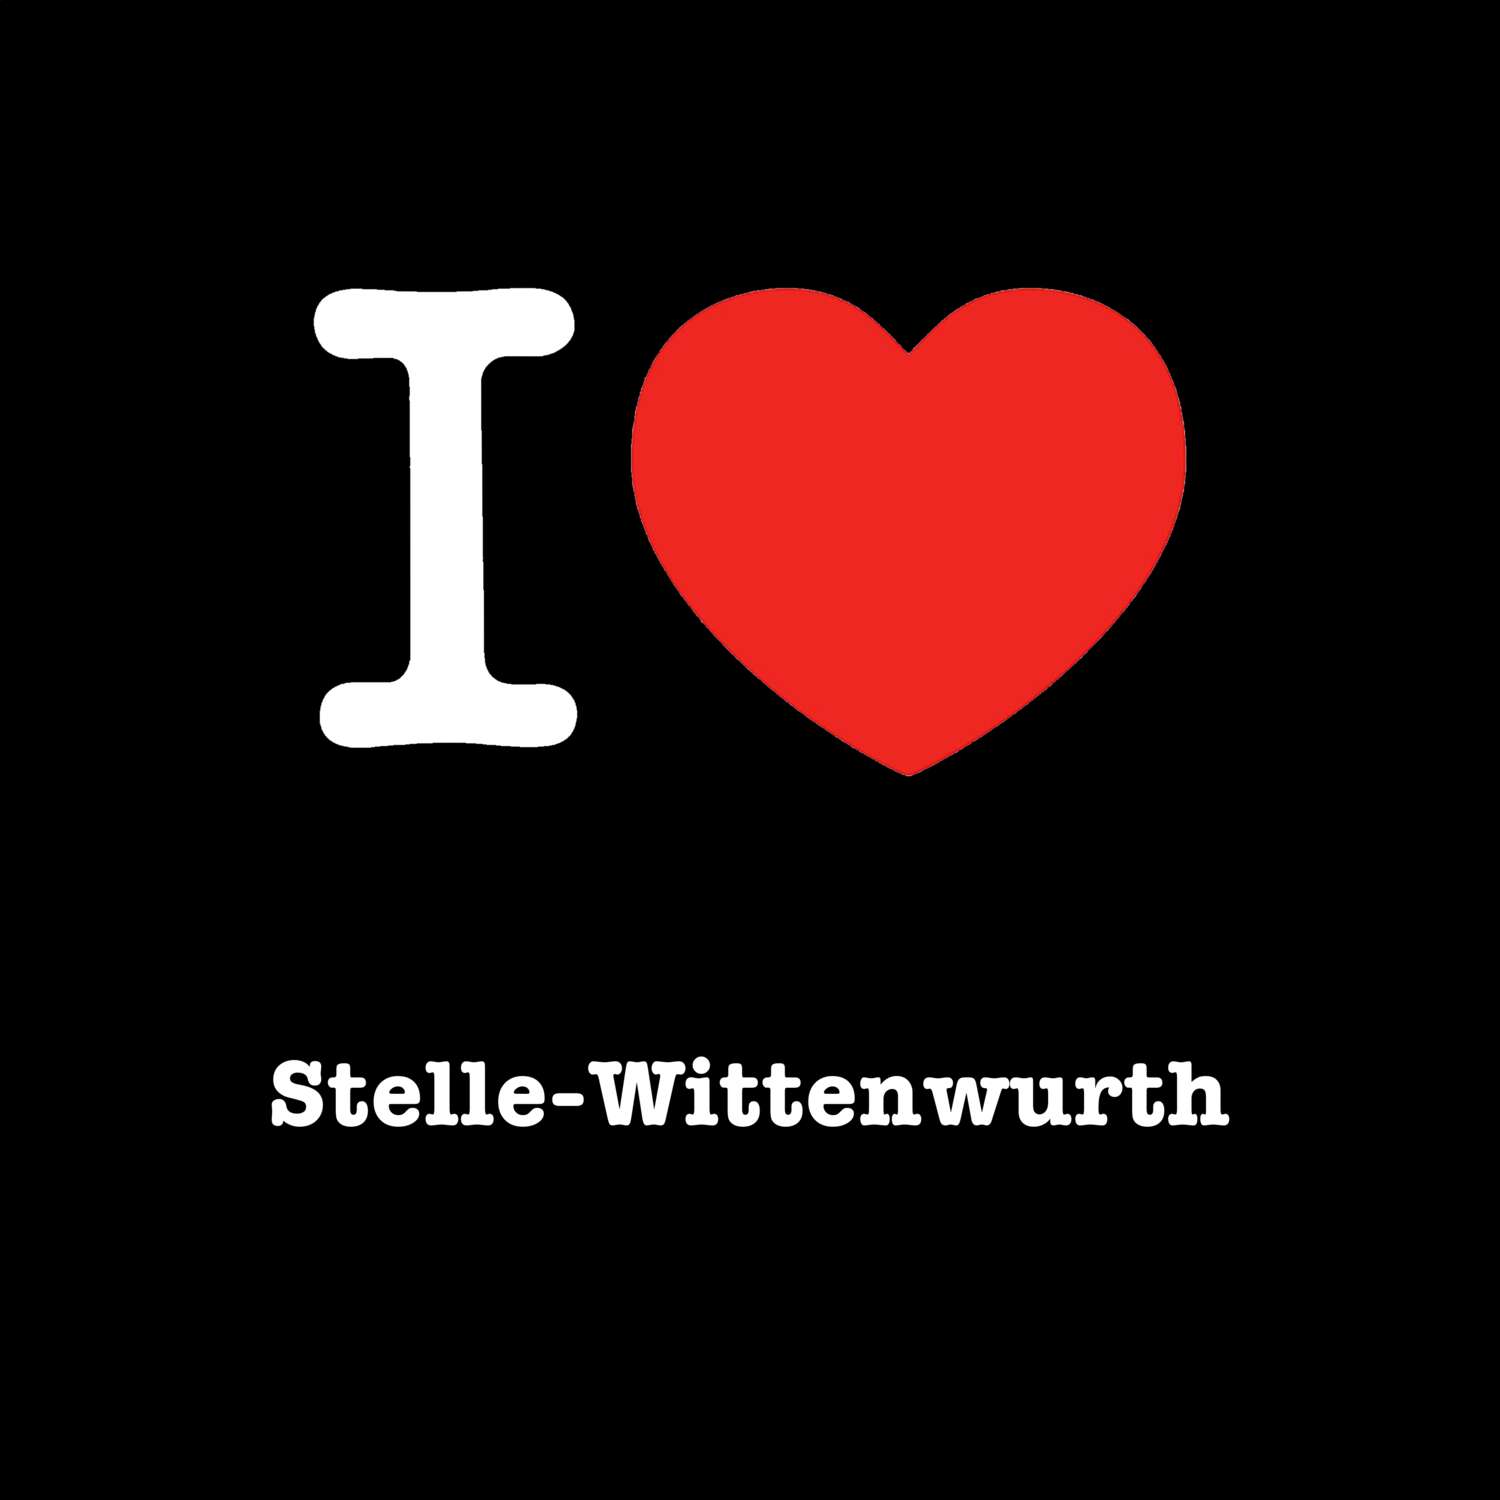 Stelle-Wittenwurth T-Shirt »I love«